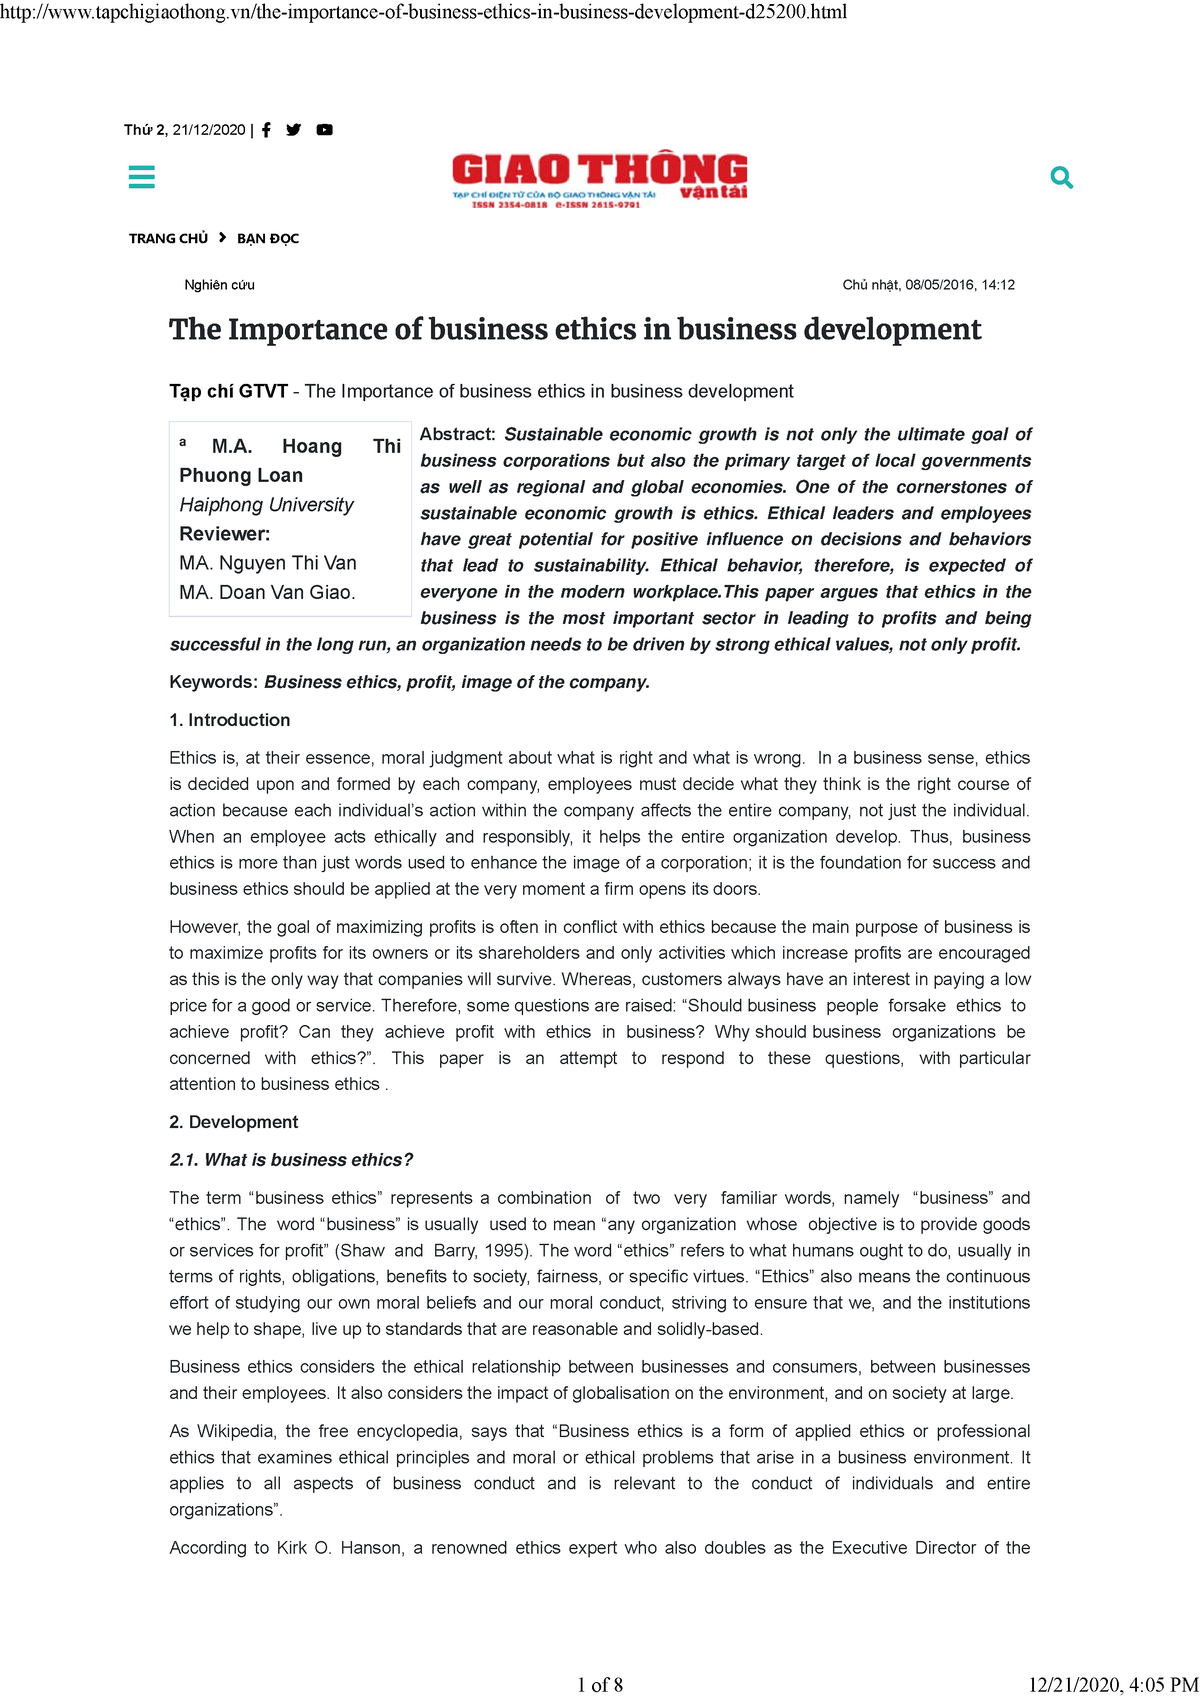 Business Ethics - Wikipedia, The Free Encyclopedia, PDF, Business Ethics